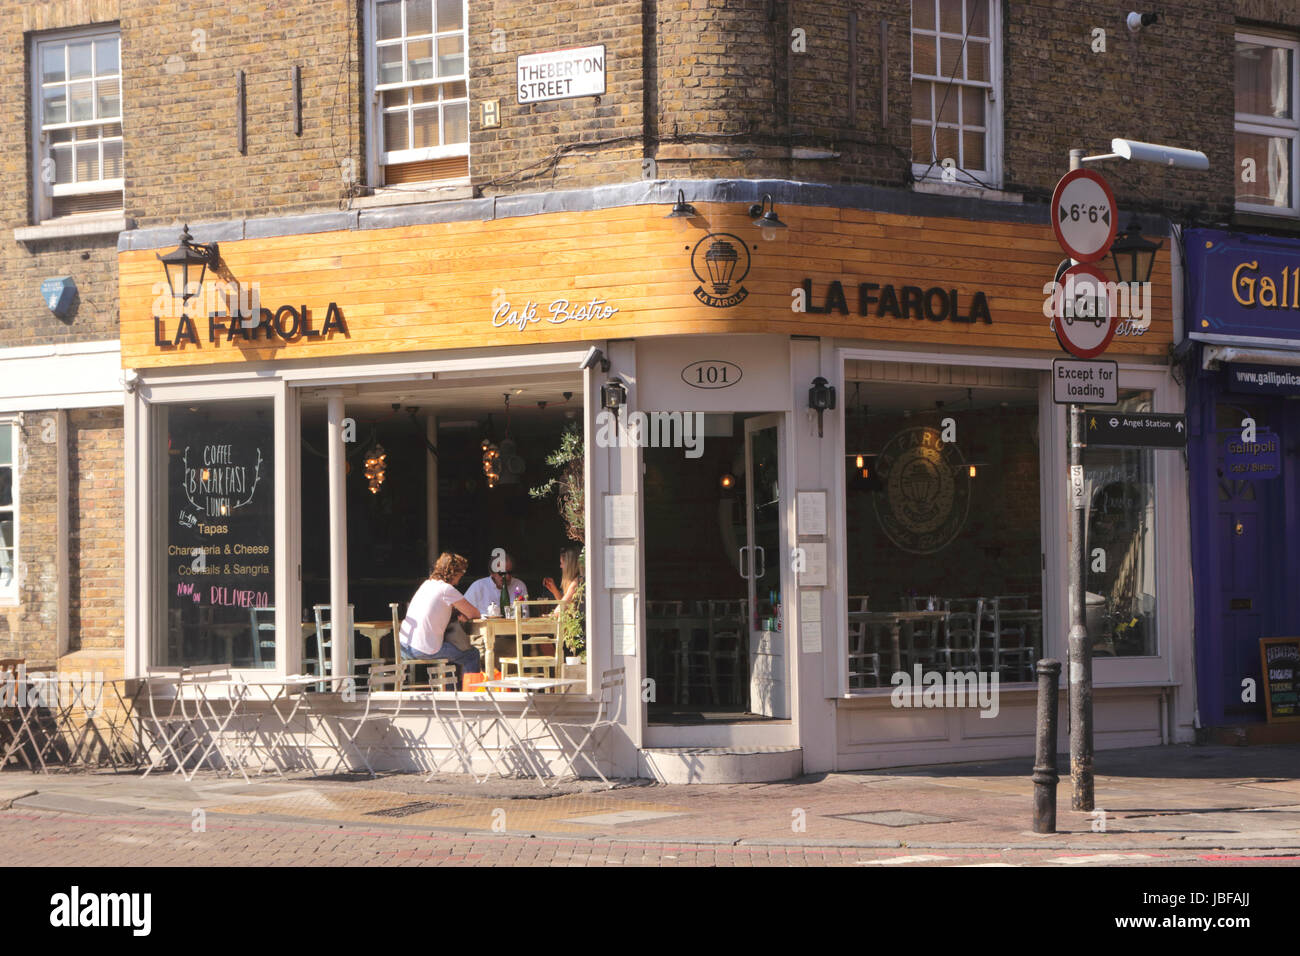 La Farola Cafe Bistro Upper Street Islington London Stock Photo